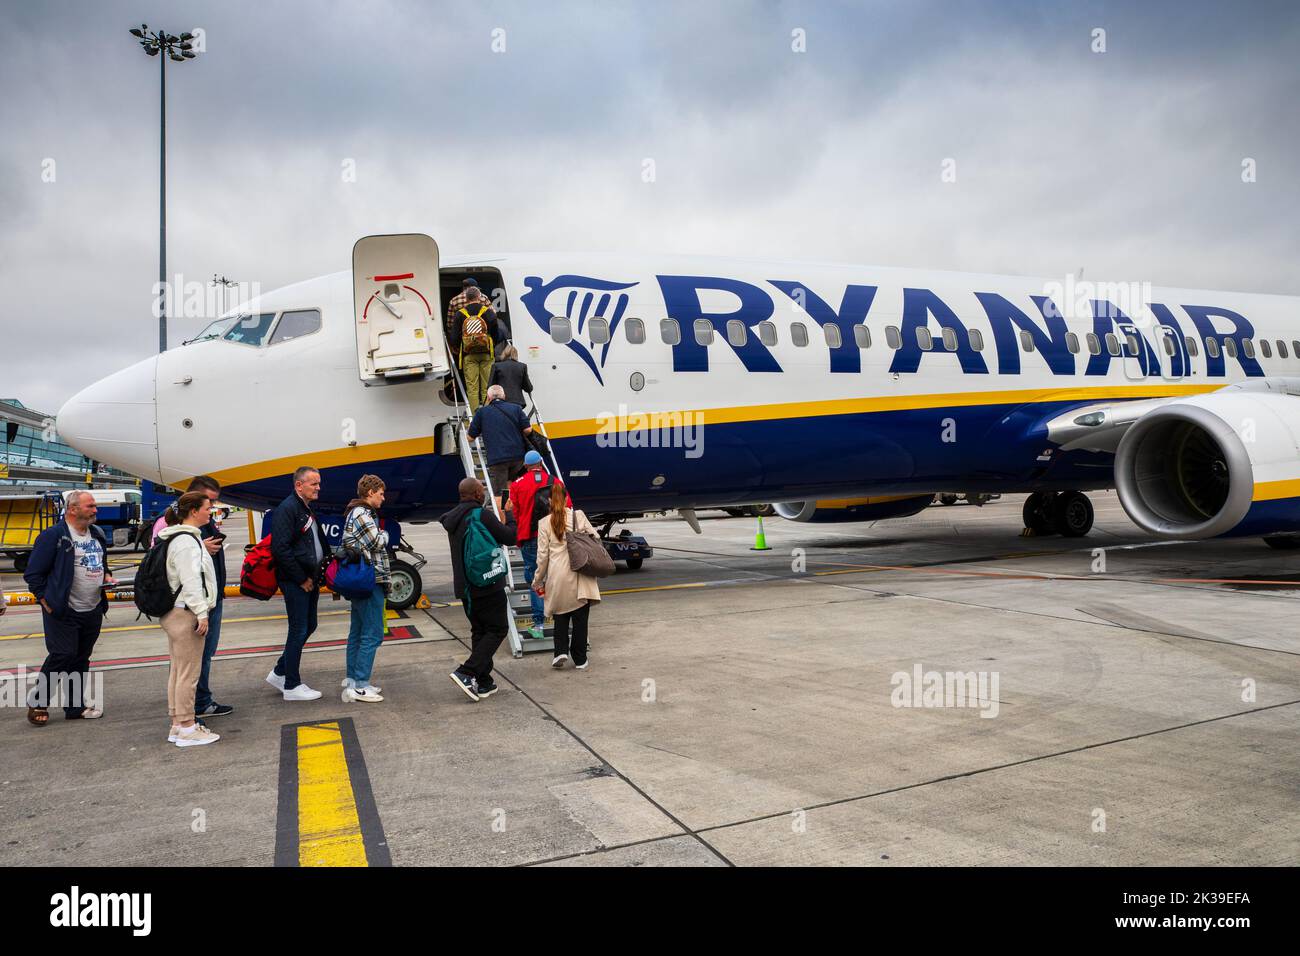 Ryanair passengers boarding aircraft Stock Photo